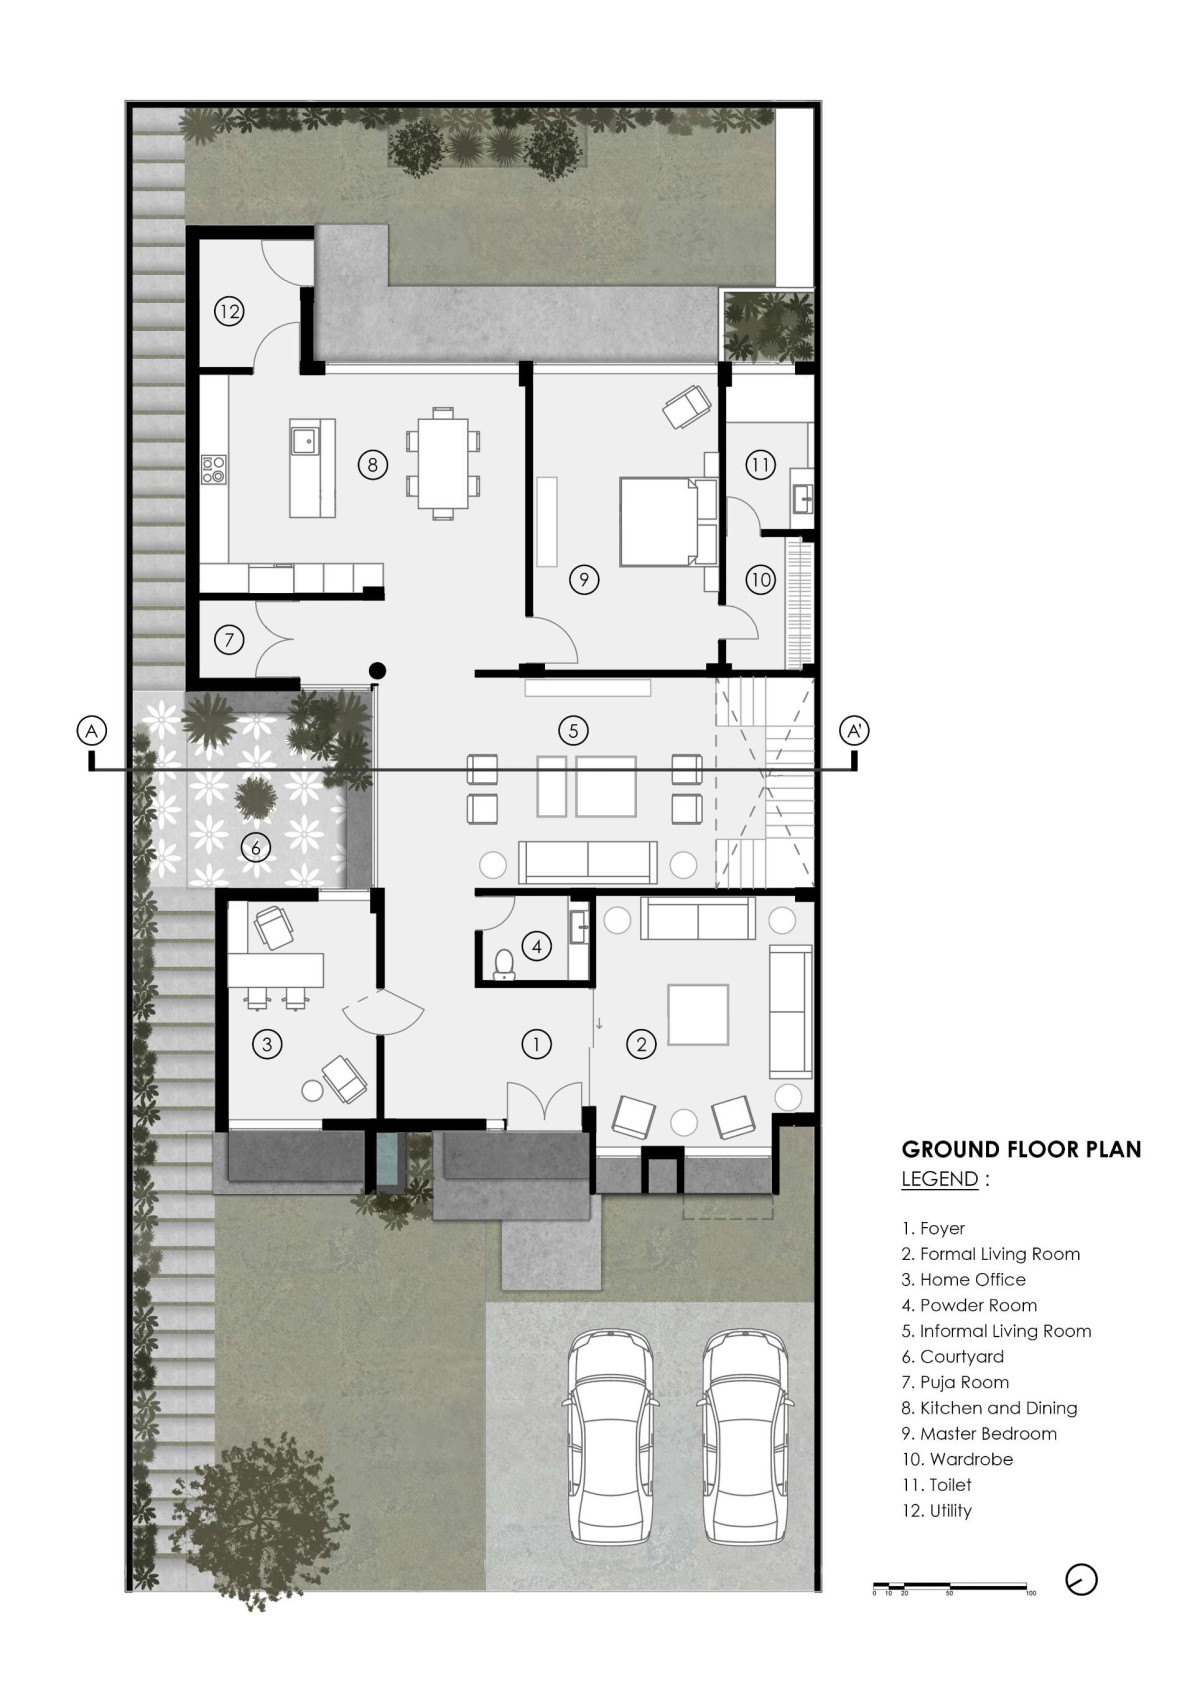 Ground Floor Plan of House One891 by Studio Vasaka